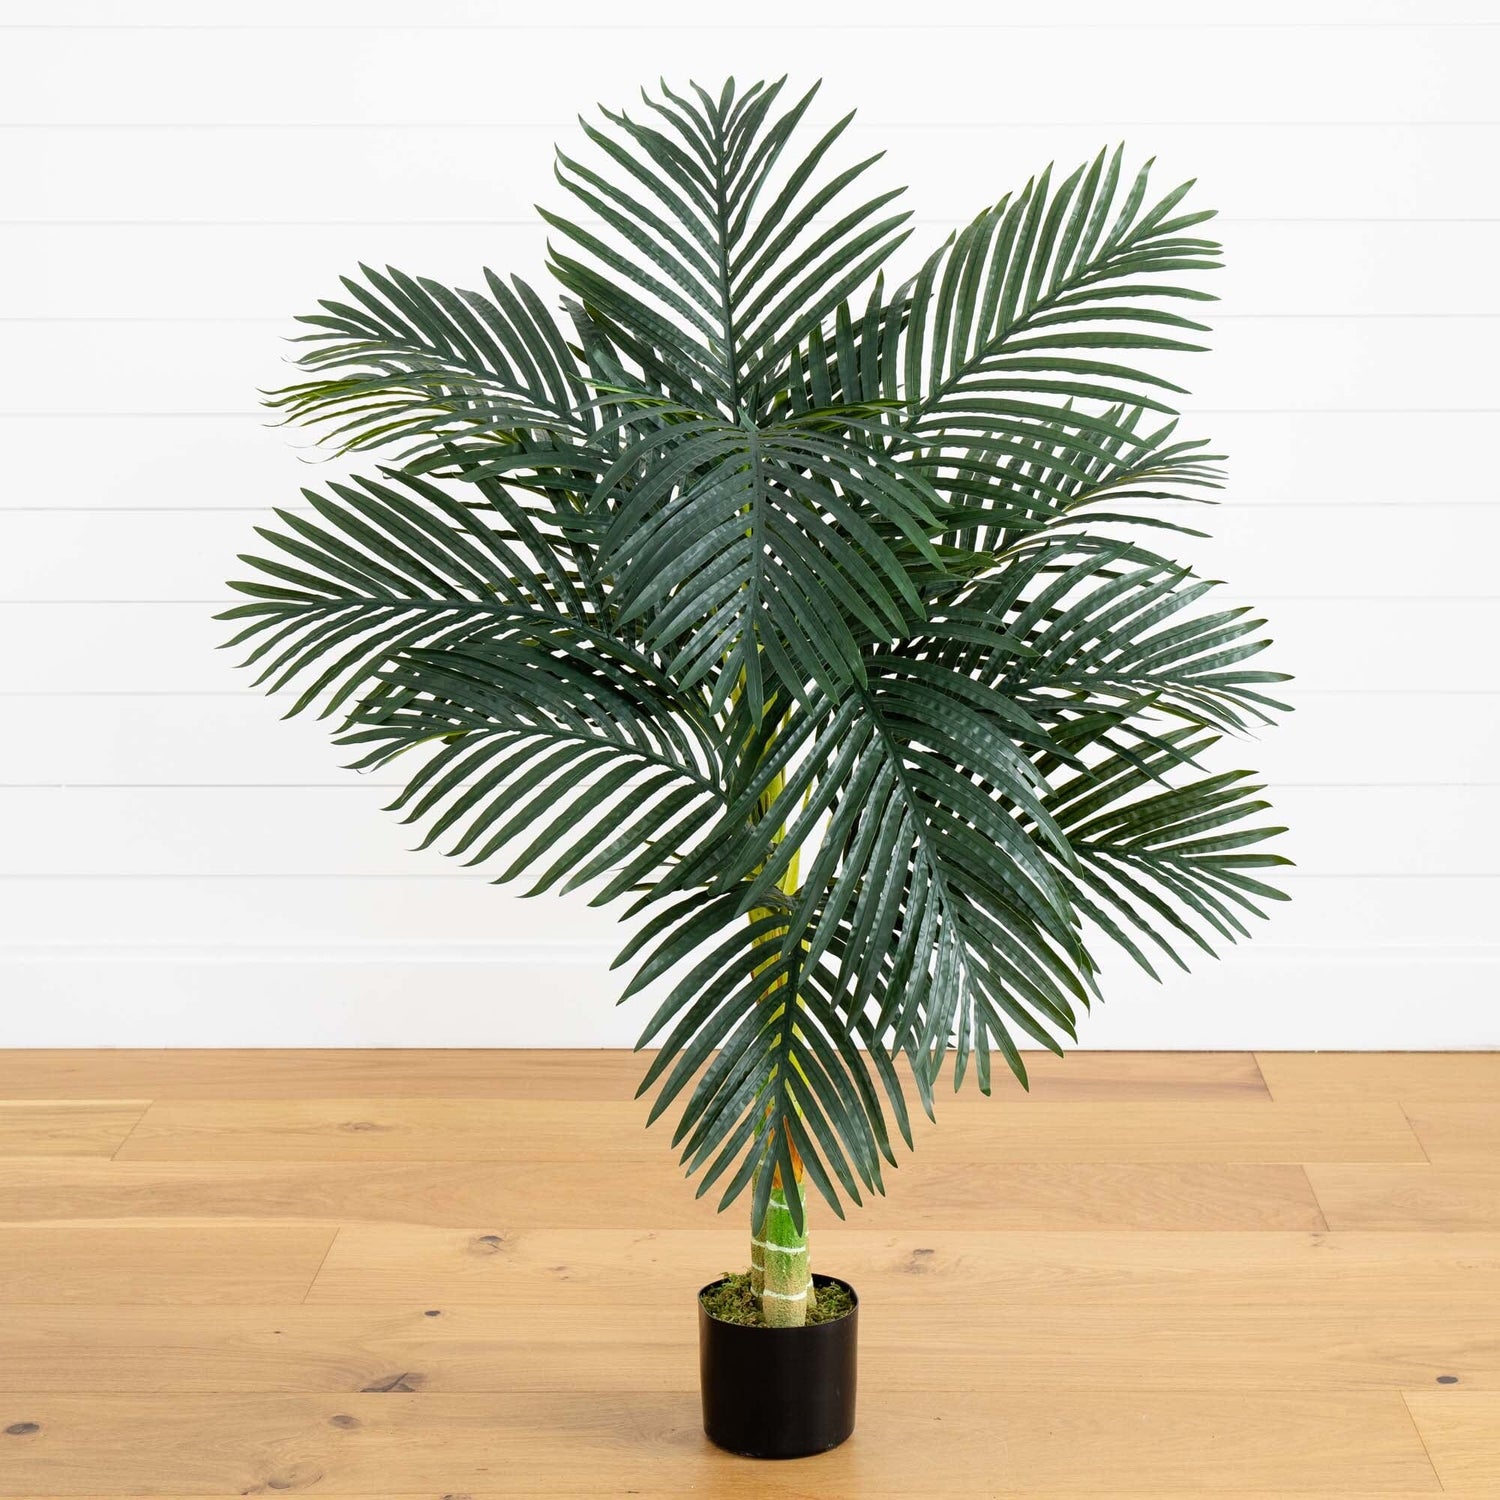 4’ Golden Cane Palm Tree